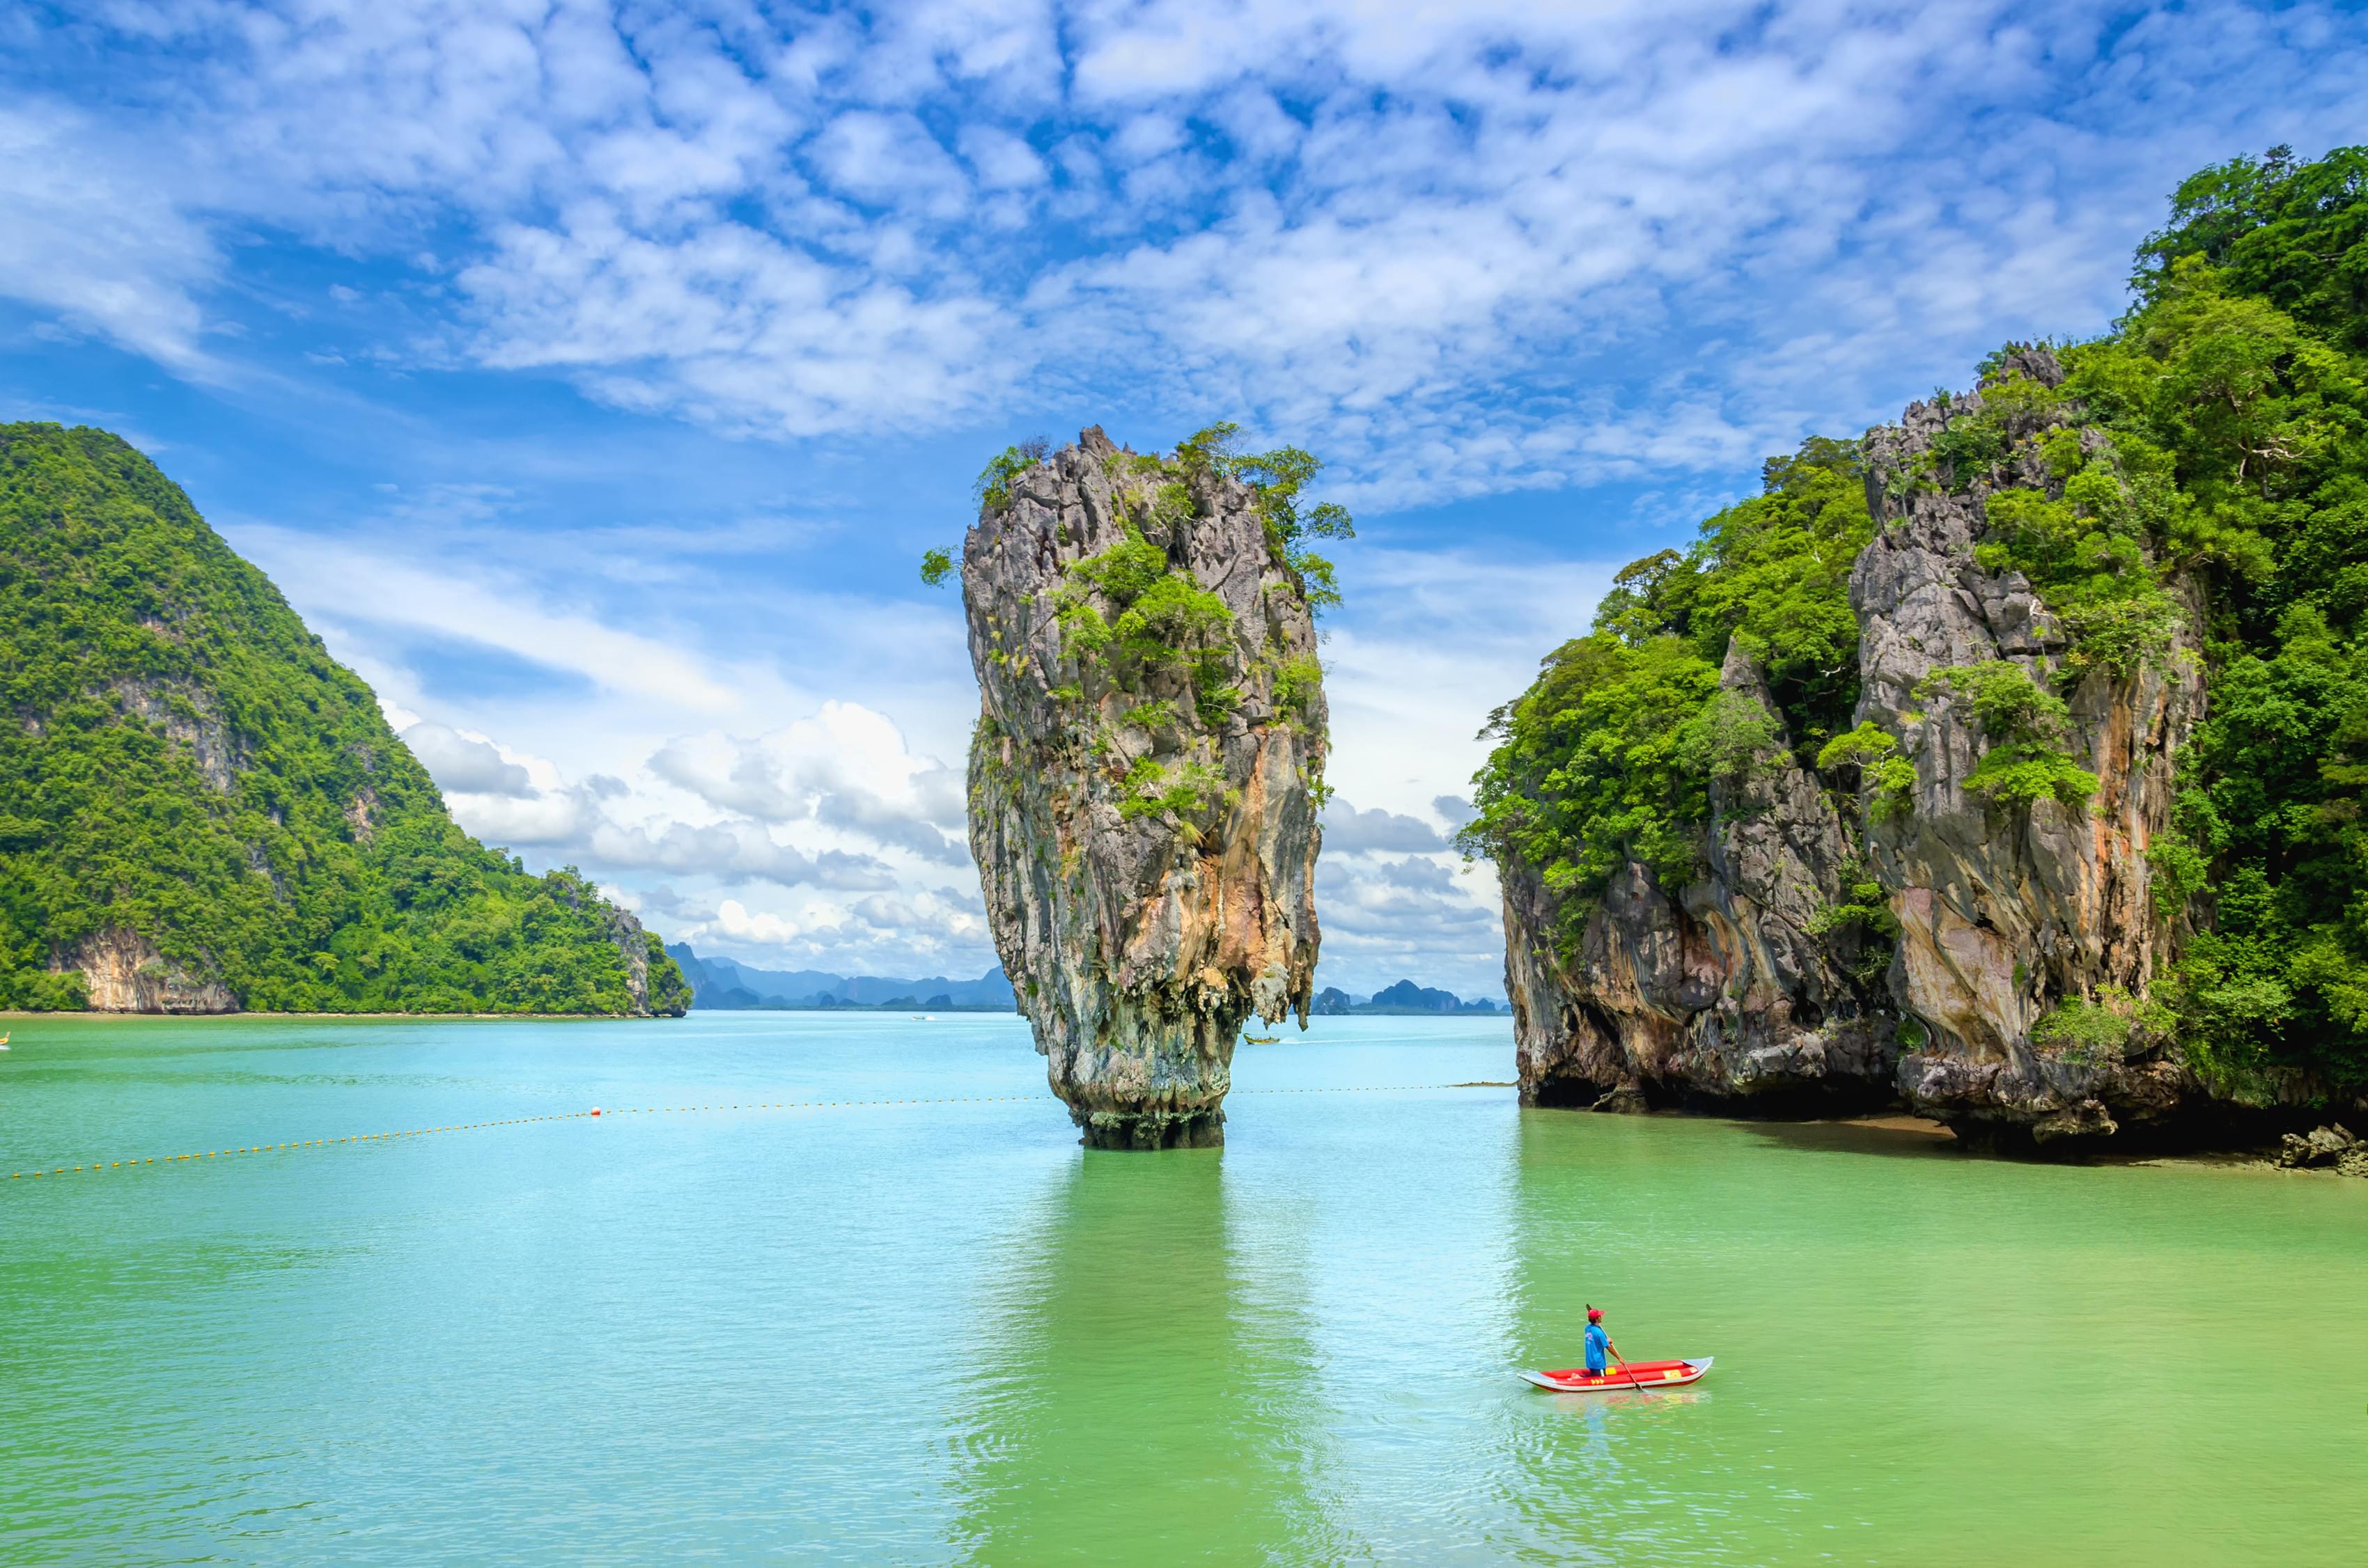 A trip to James Bond Island Thailand - A trip to James Bond Island, Thailand